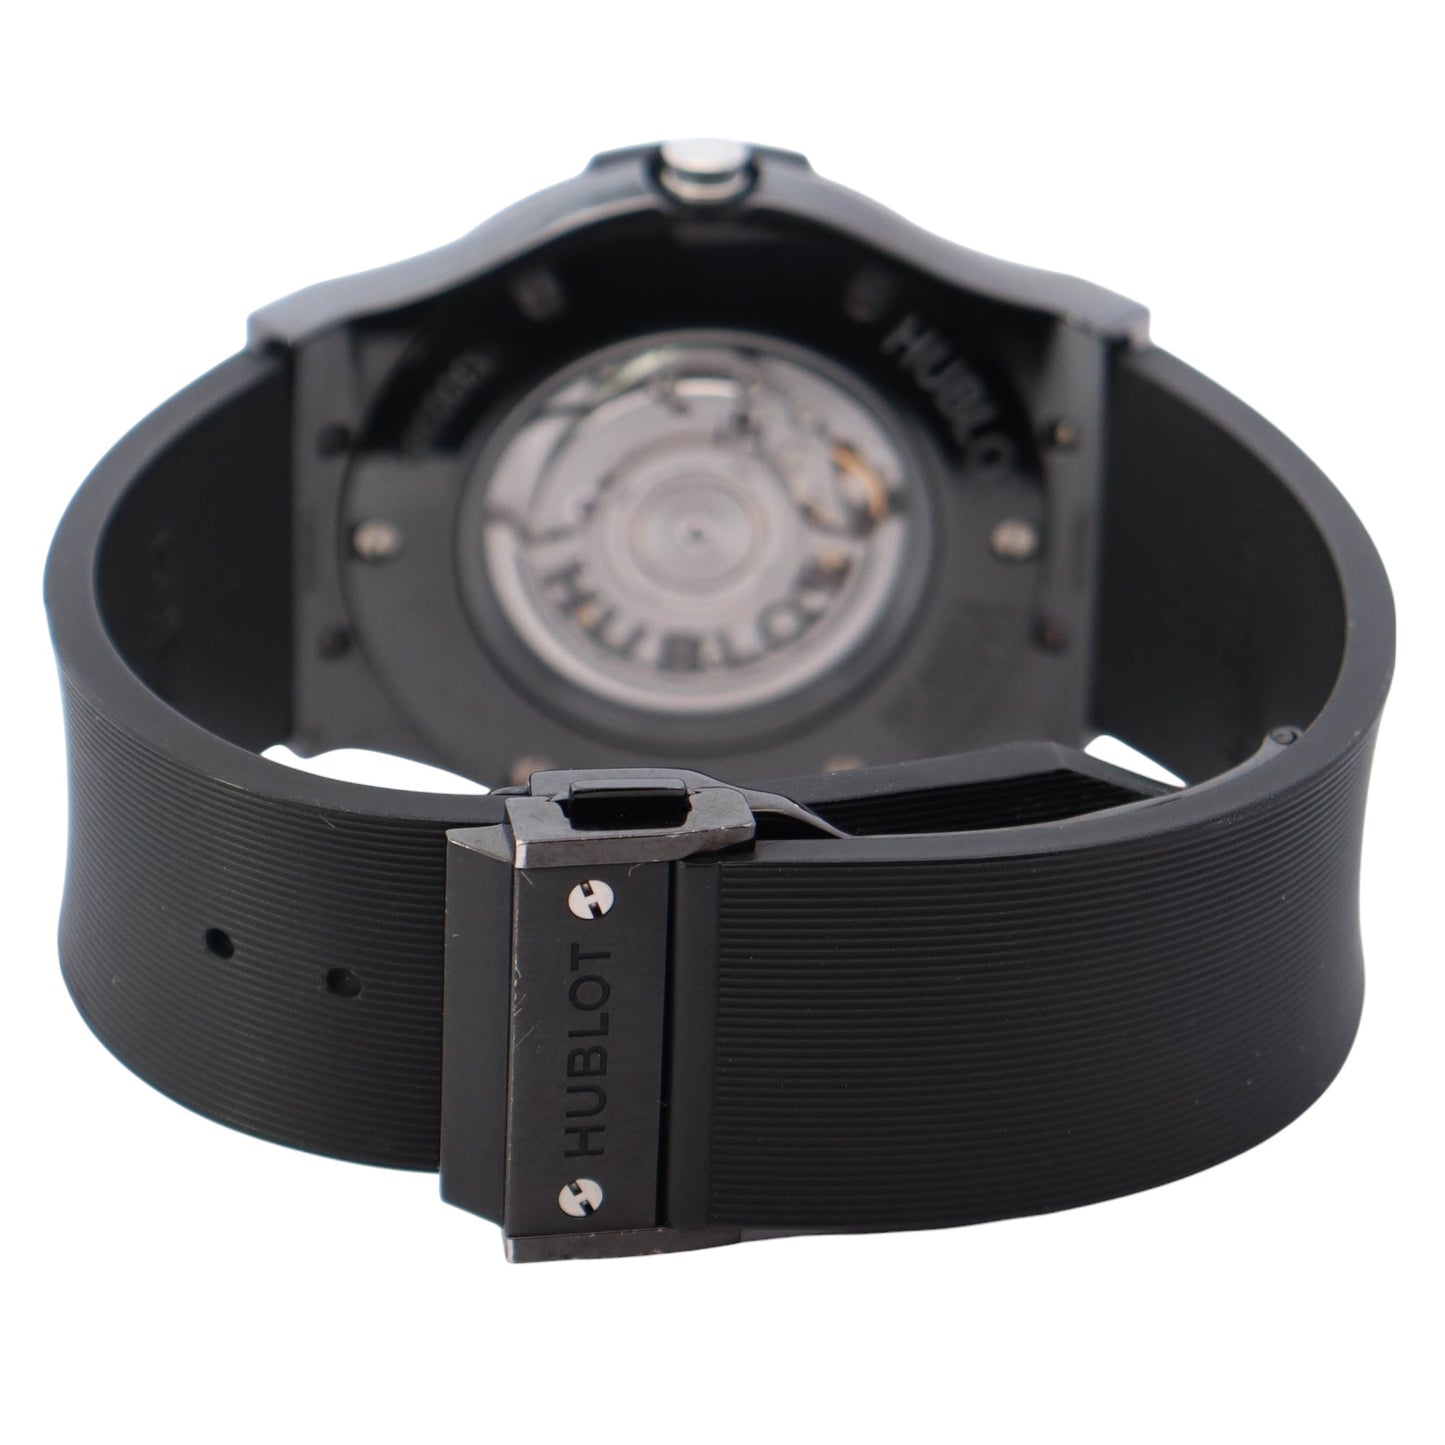 Hublot Classic Fusion Black Magic Black Ceramic 45mm Black Stick Dial Watch Reference #:  511.CM.1171.RX